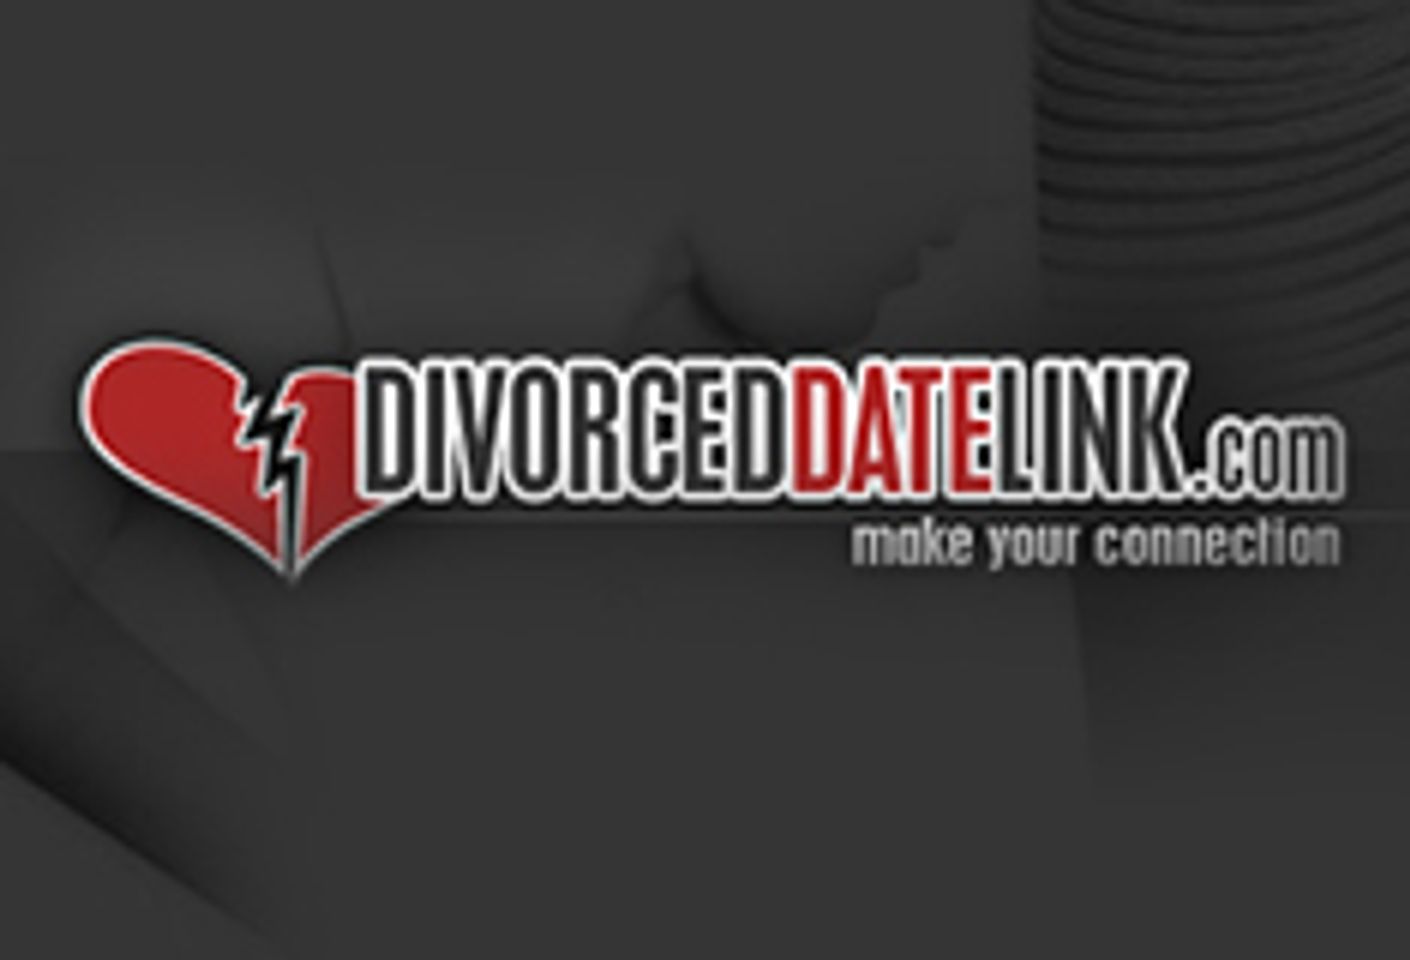 AdultDateLink Launches DivorcedDateLink.com